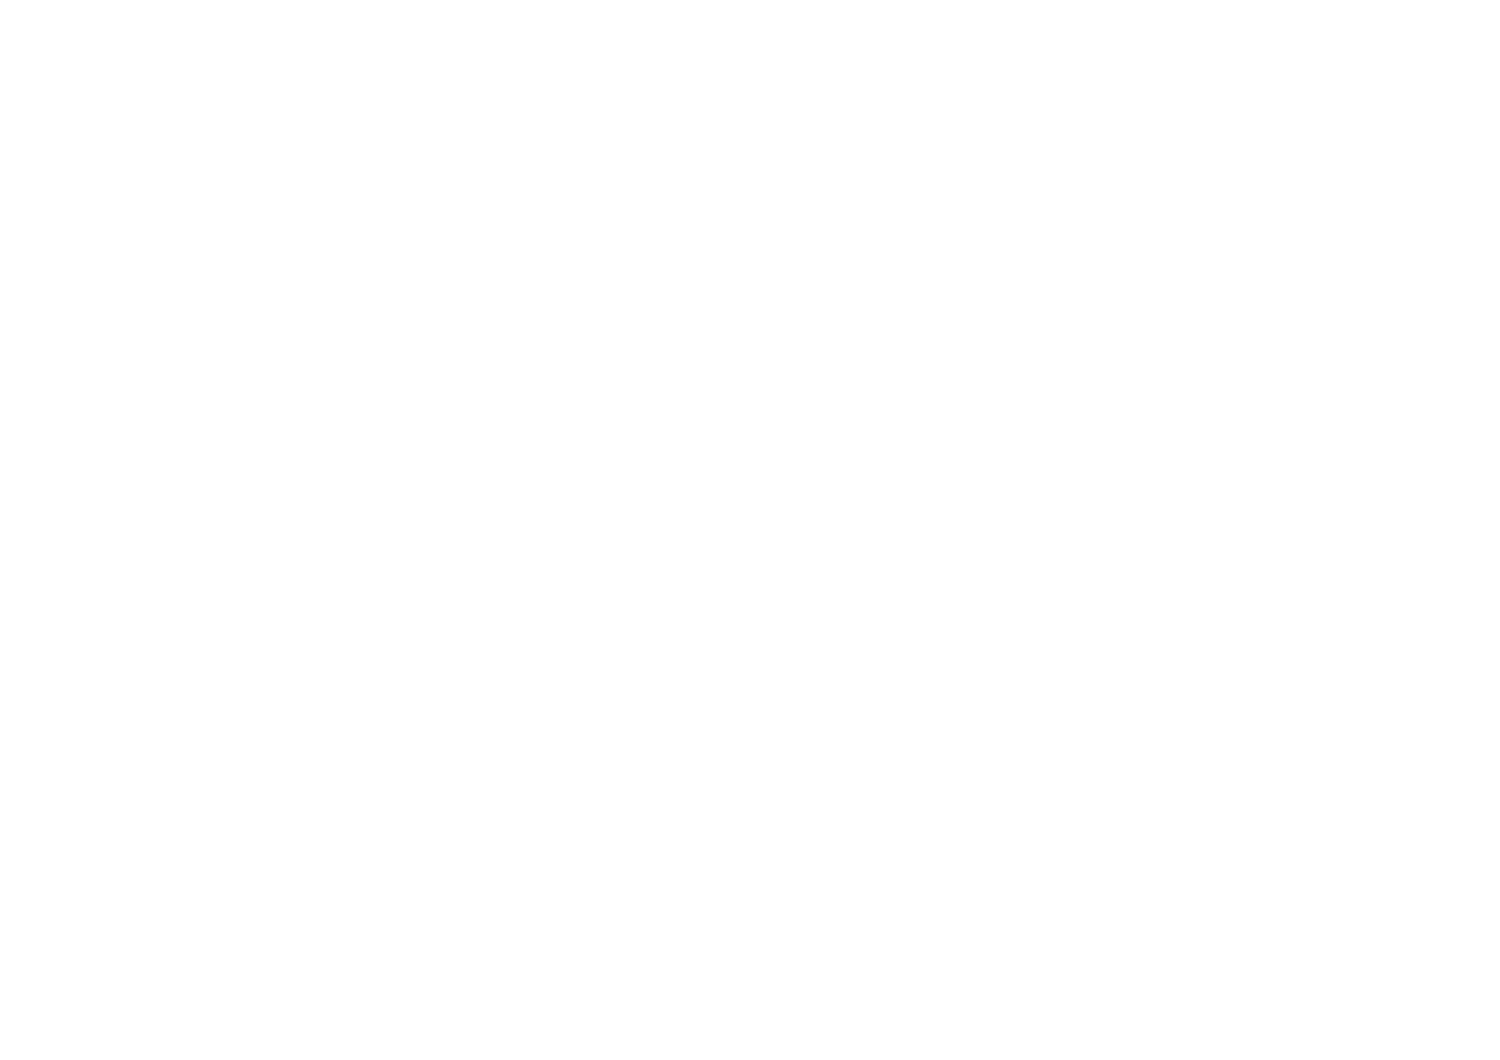 Capital Edge Church